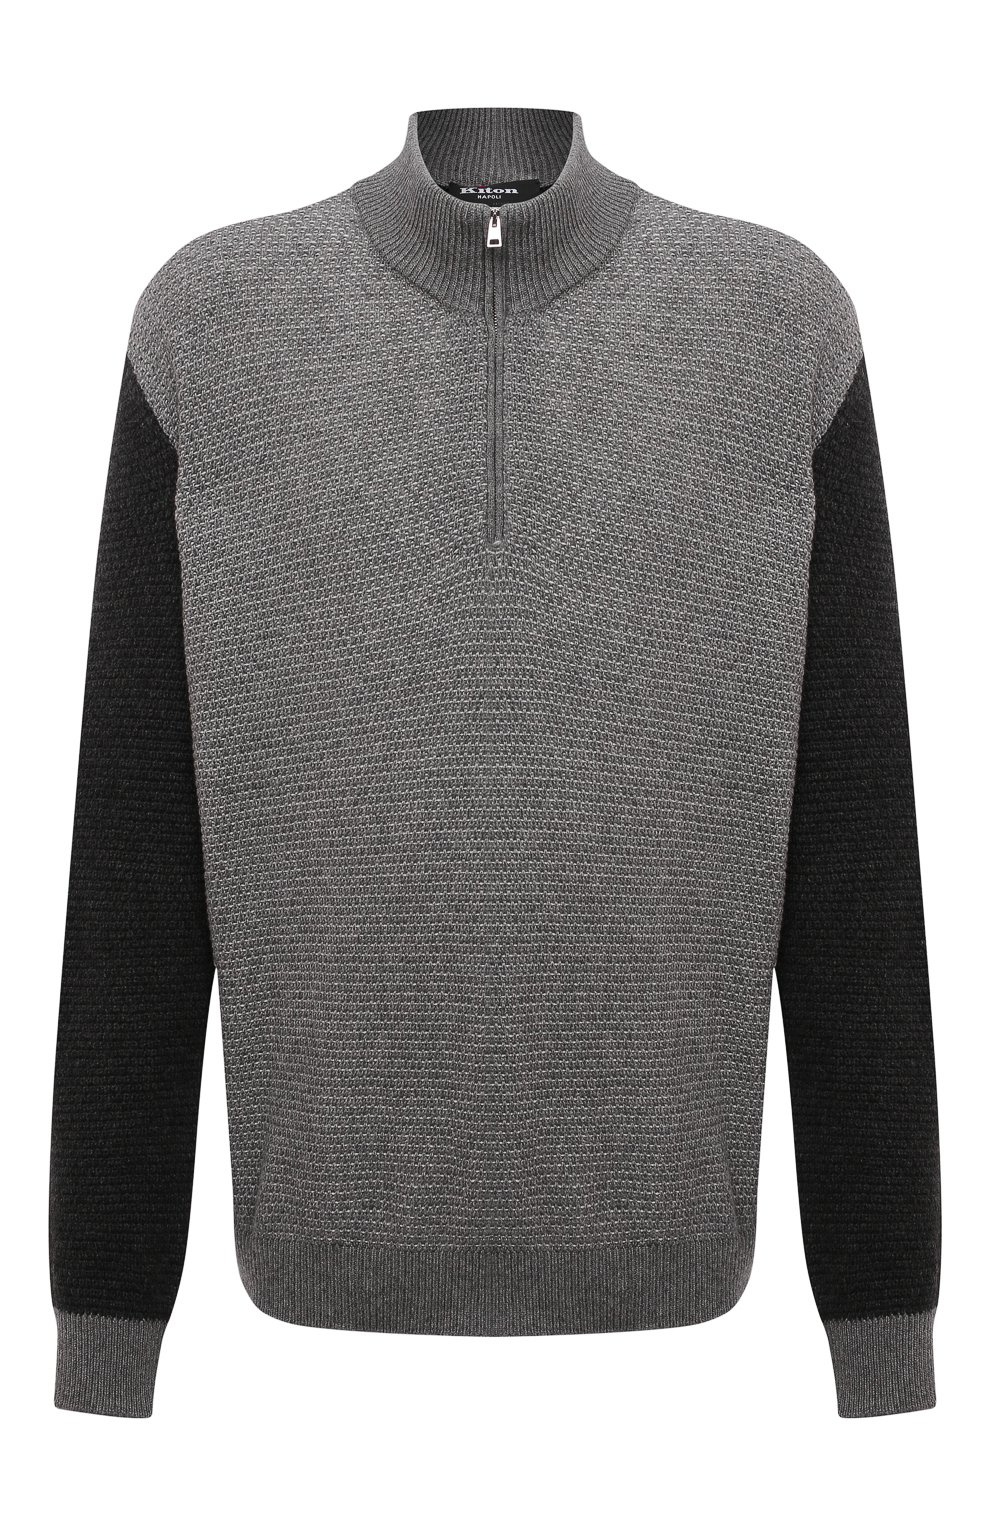 Кашемировый свитер Kiton, 324&nbsp;000 руб. (ЦУМ)